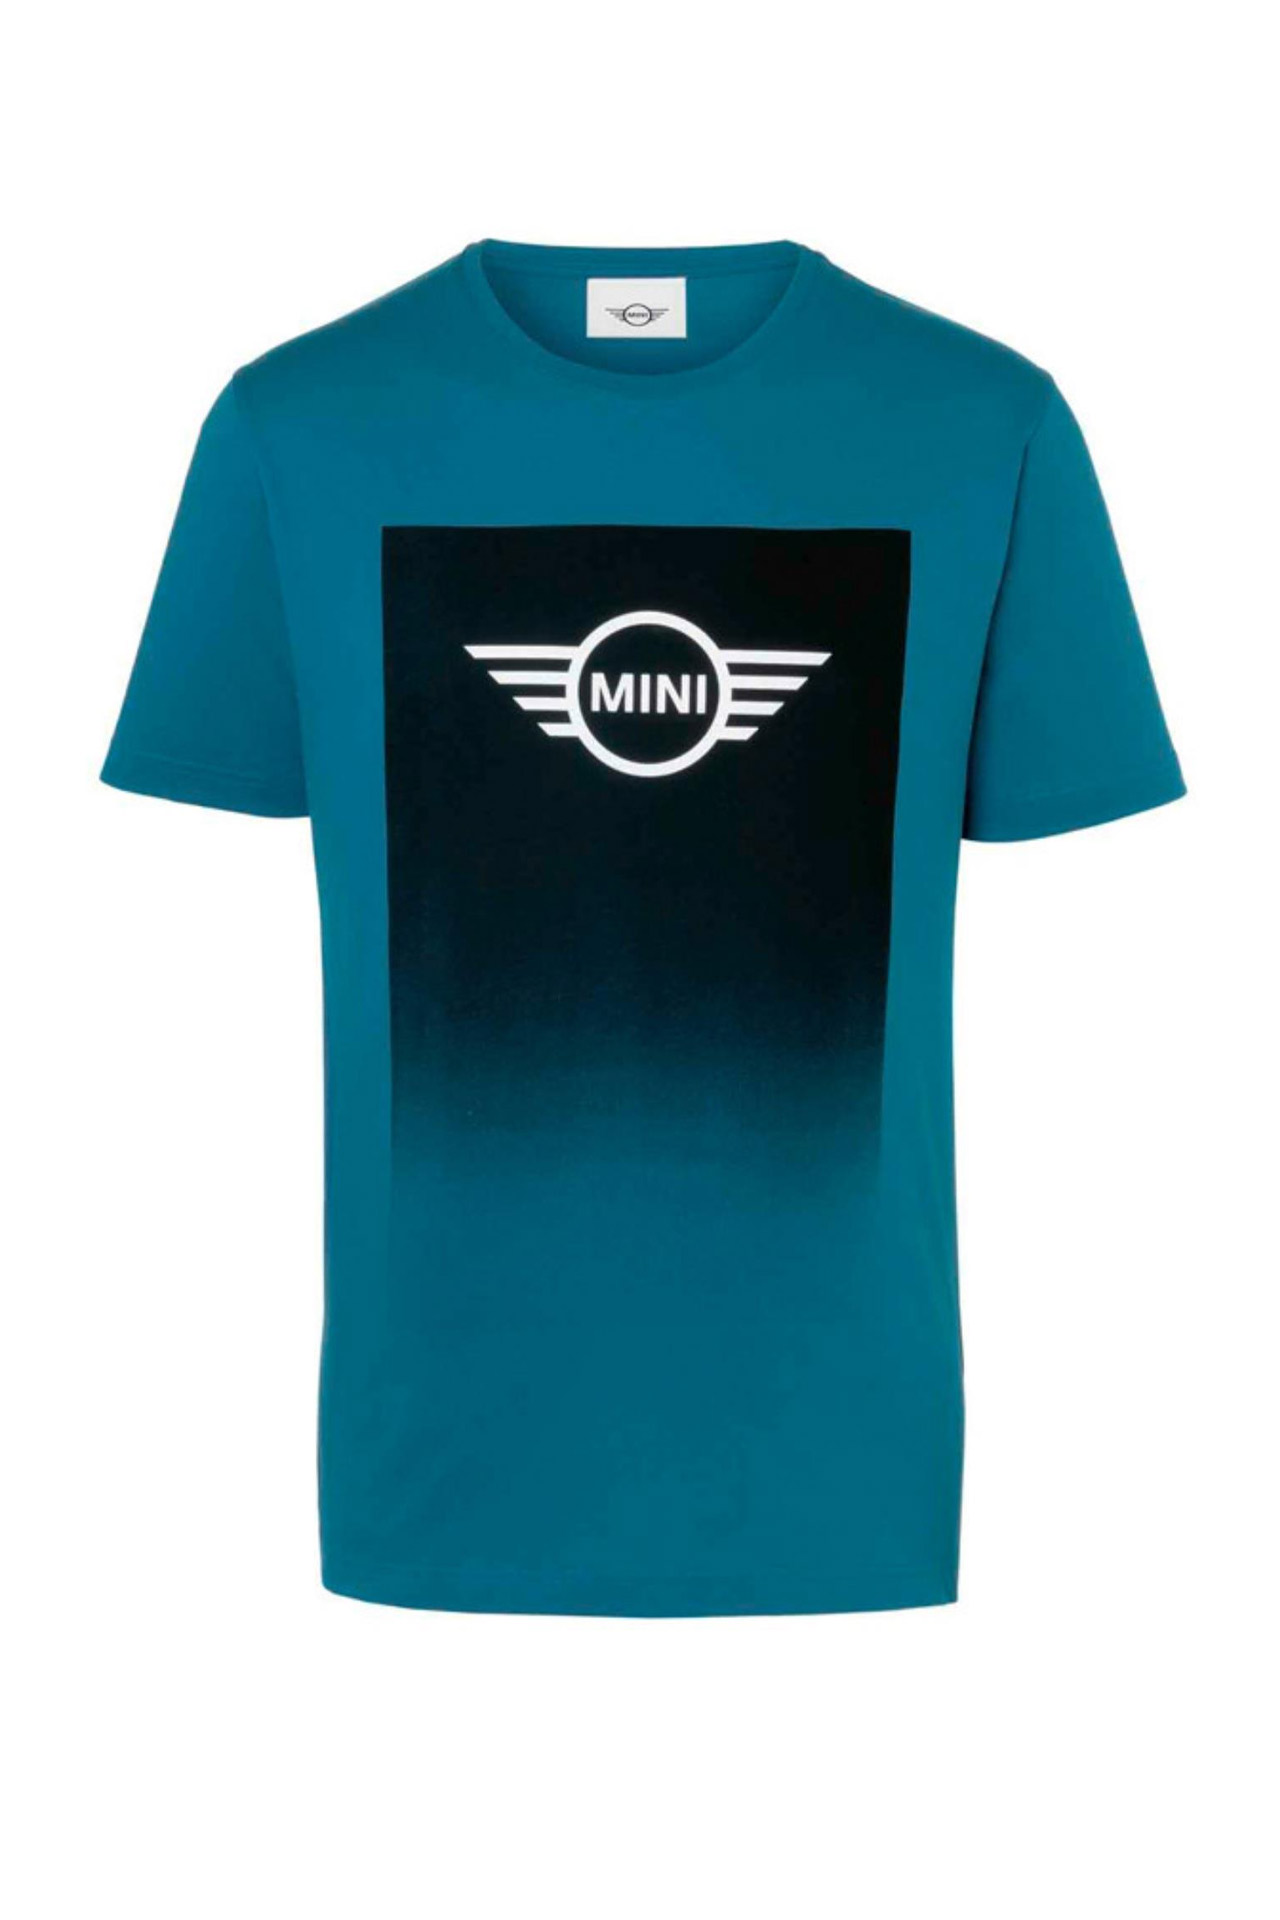 Camiseta de hombre manga corta con logo MINI